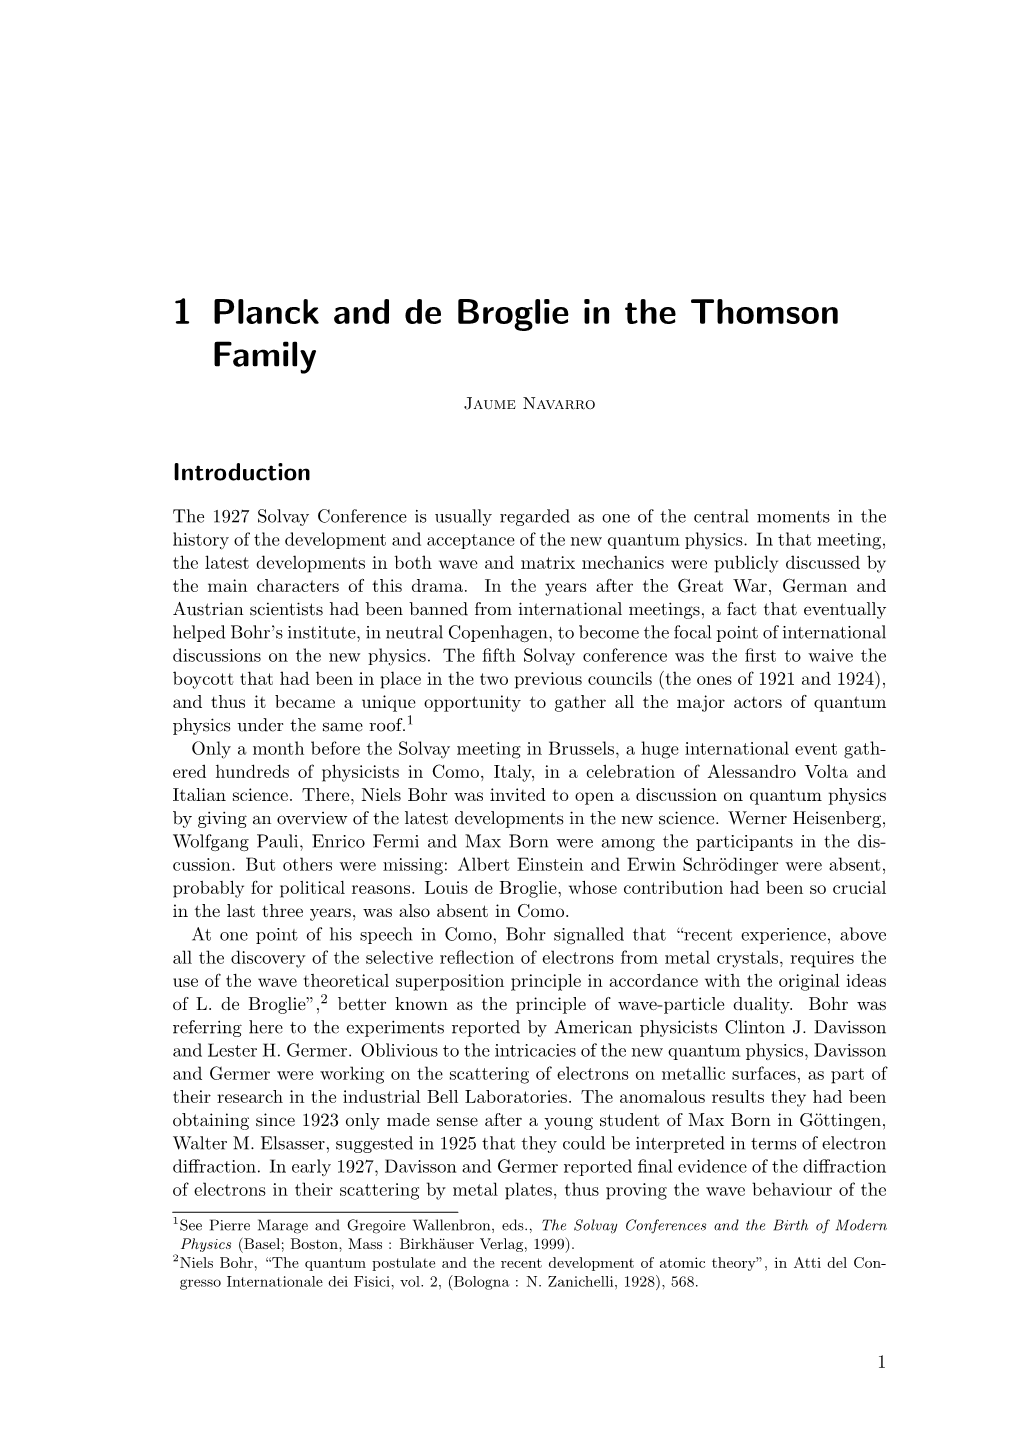 1 Planck and De Broglie in the Thomson Family